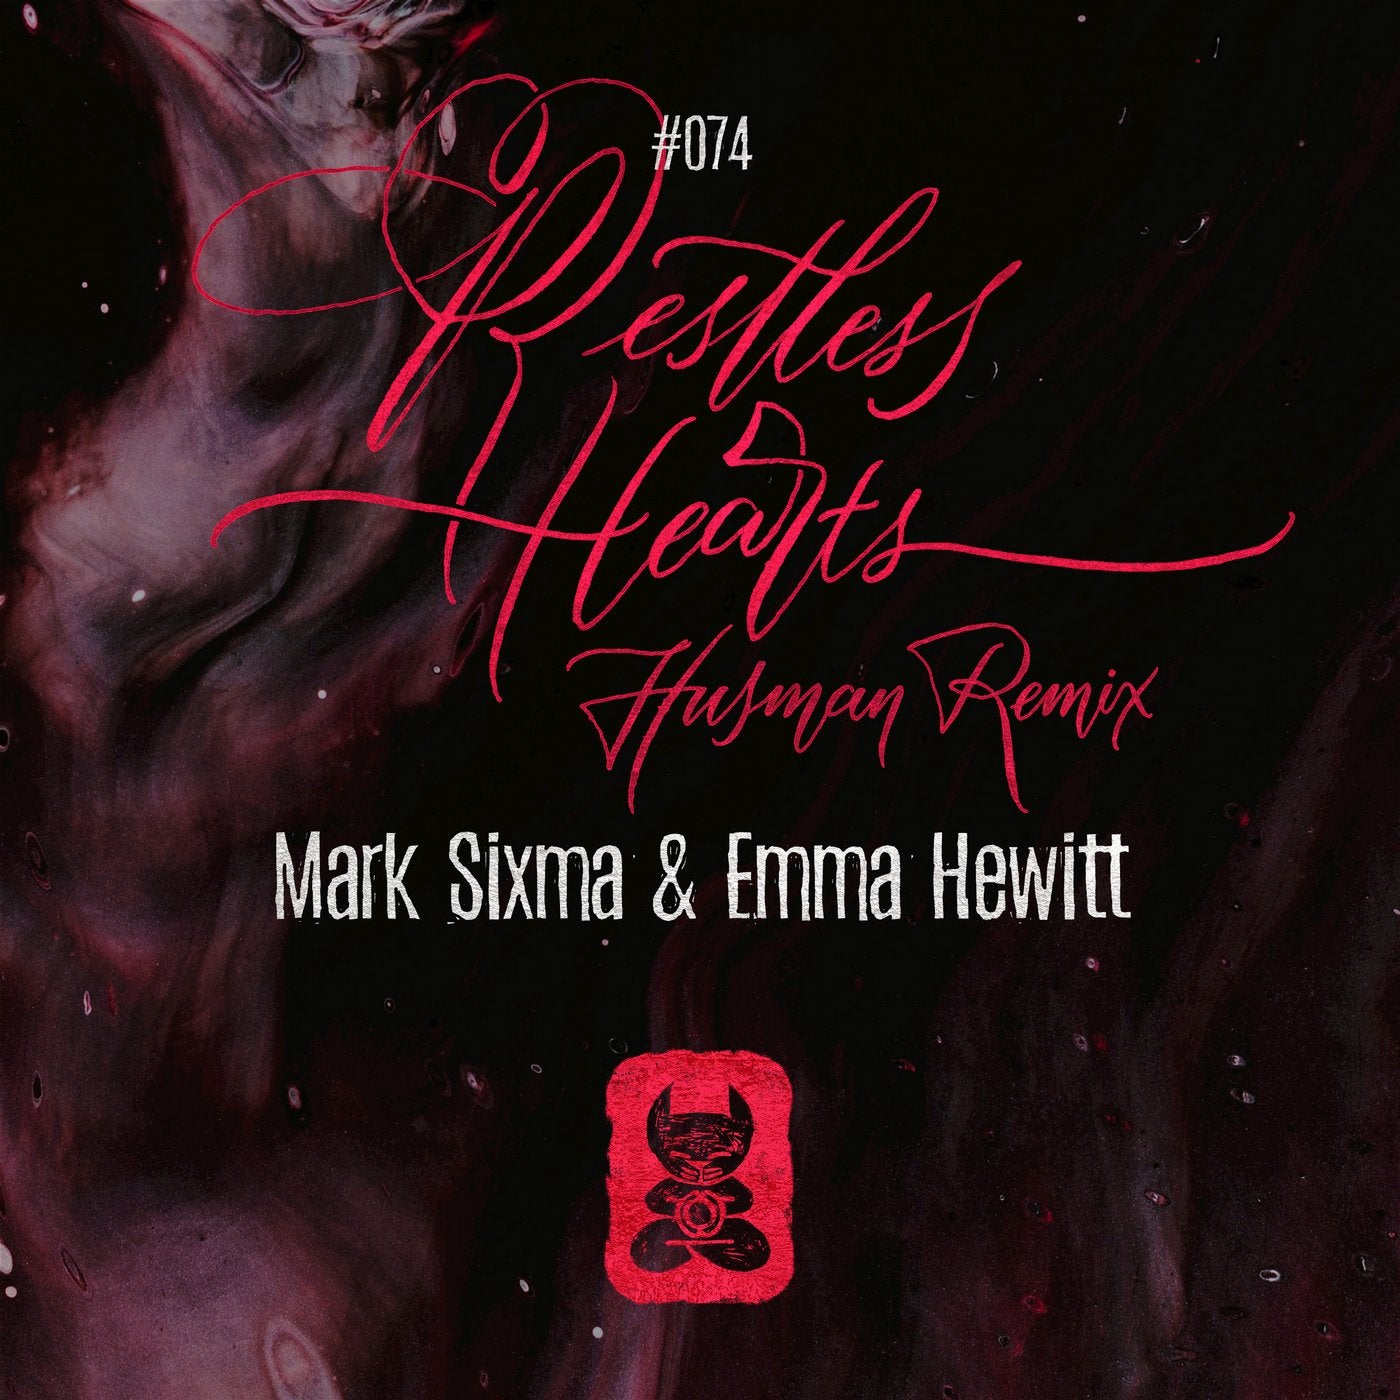 Restless Hearts - Husman Remix